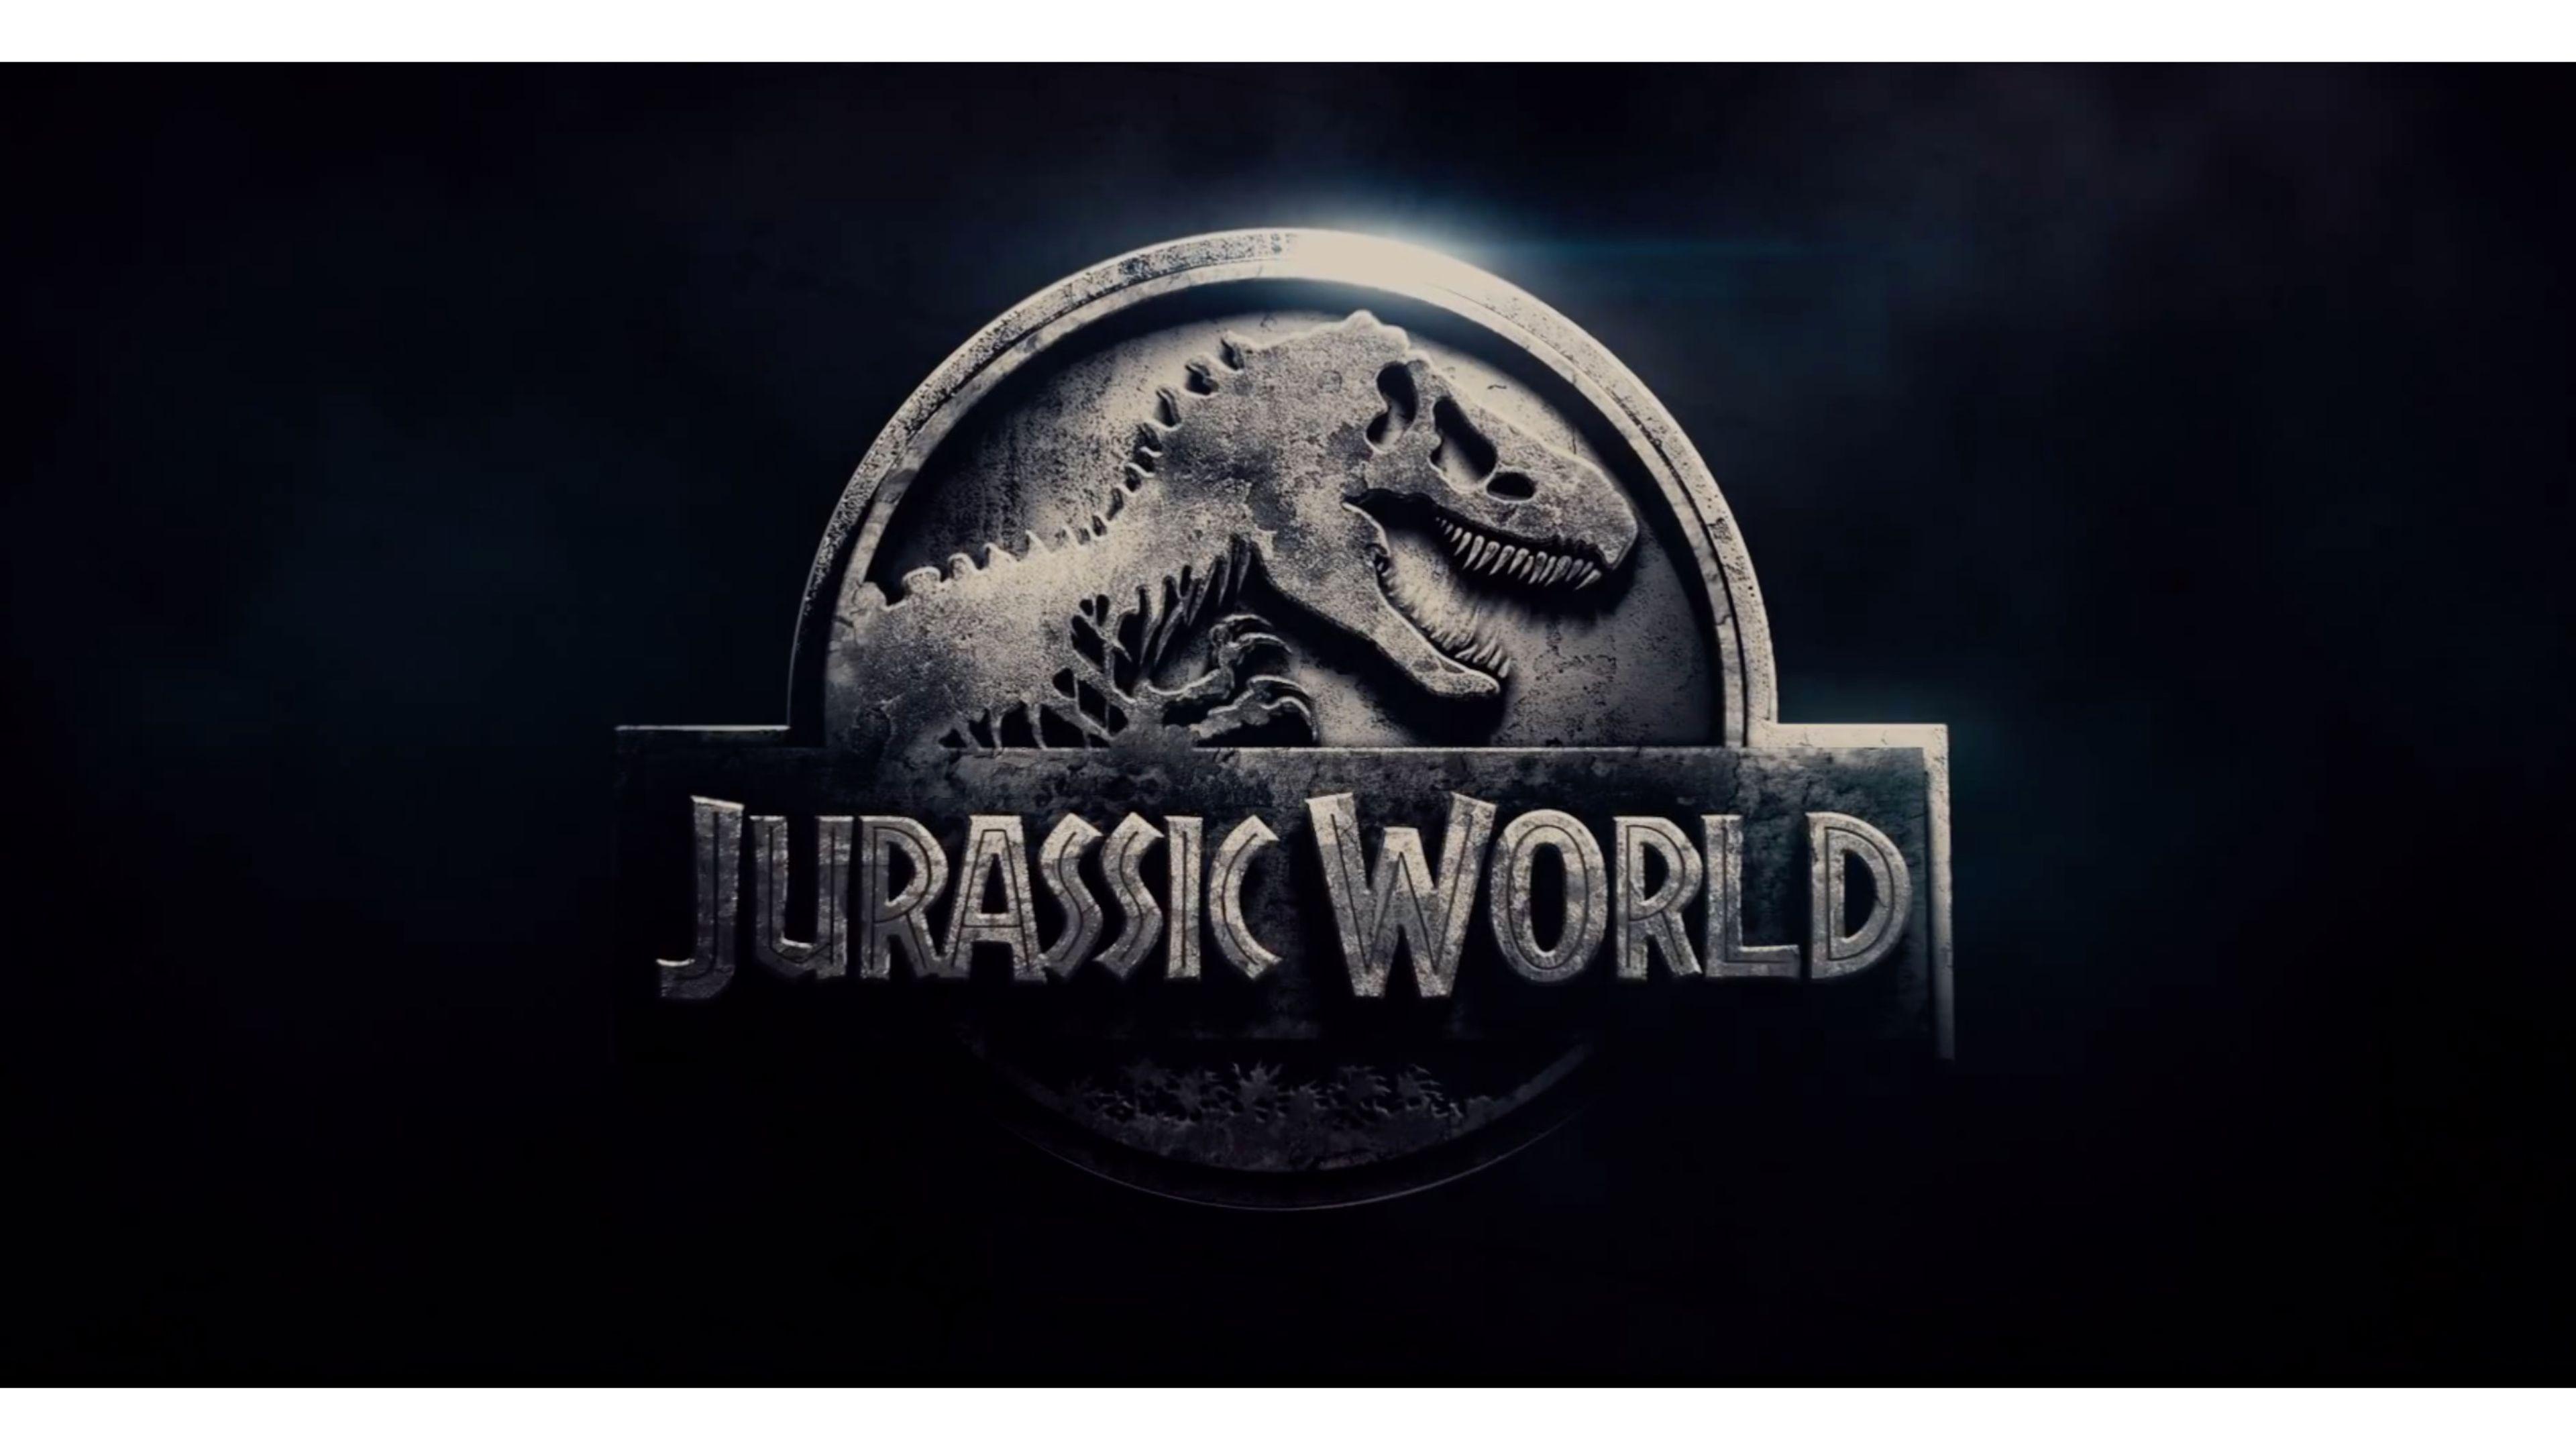 Jurassic World 4K Wallpapers - Top Free Jurassic World 4K Backgrounds